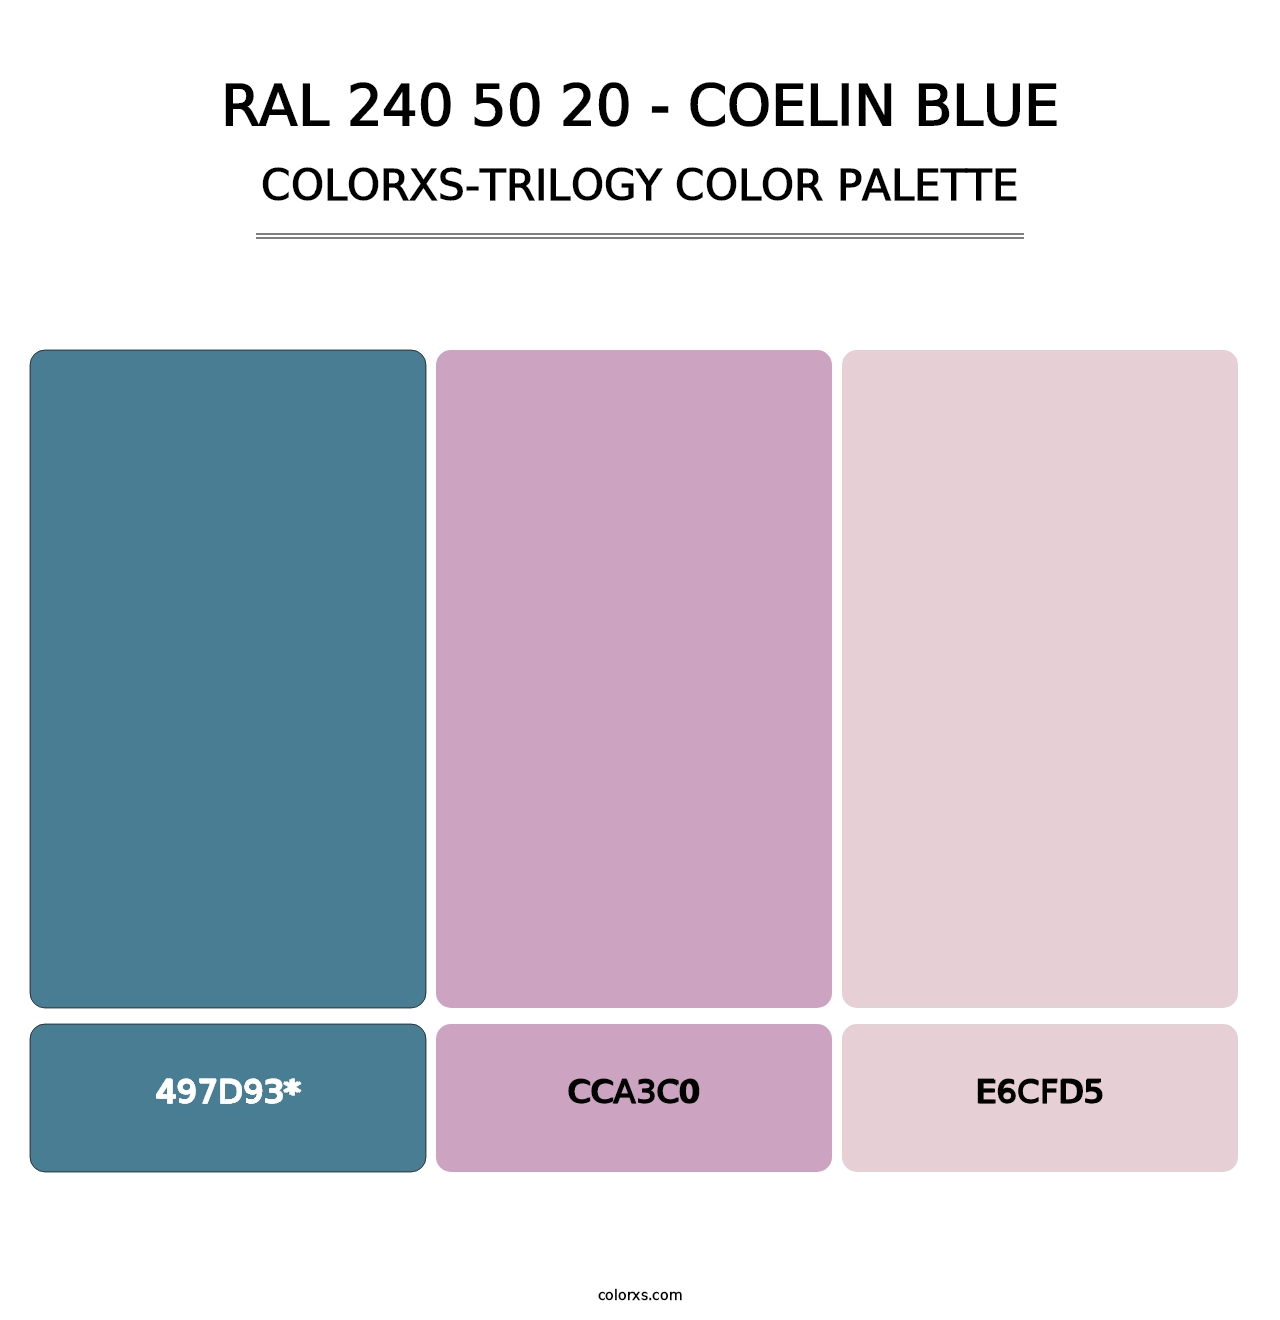 RAL 240 50 20 - Coelin Blue - Colorxs Trilogy Palette